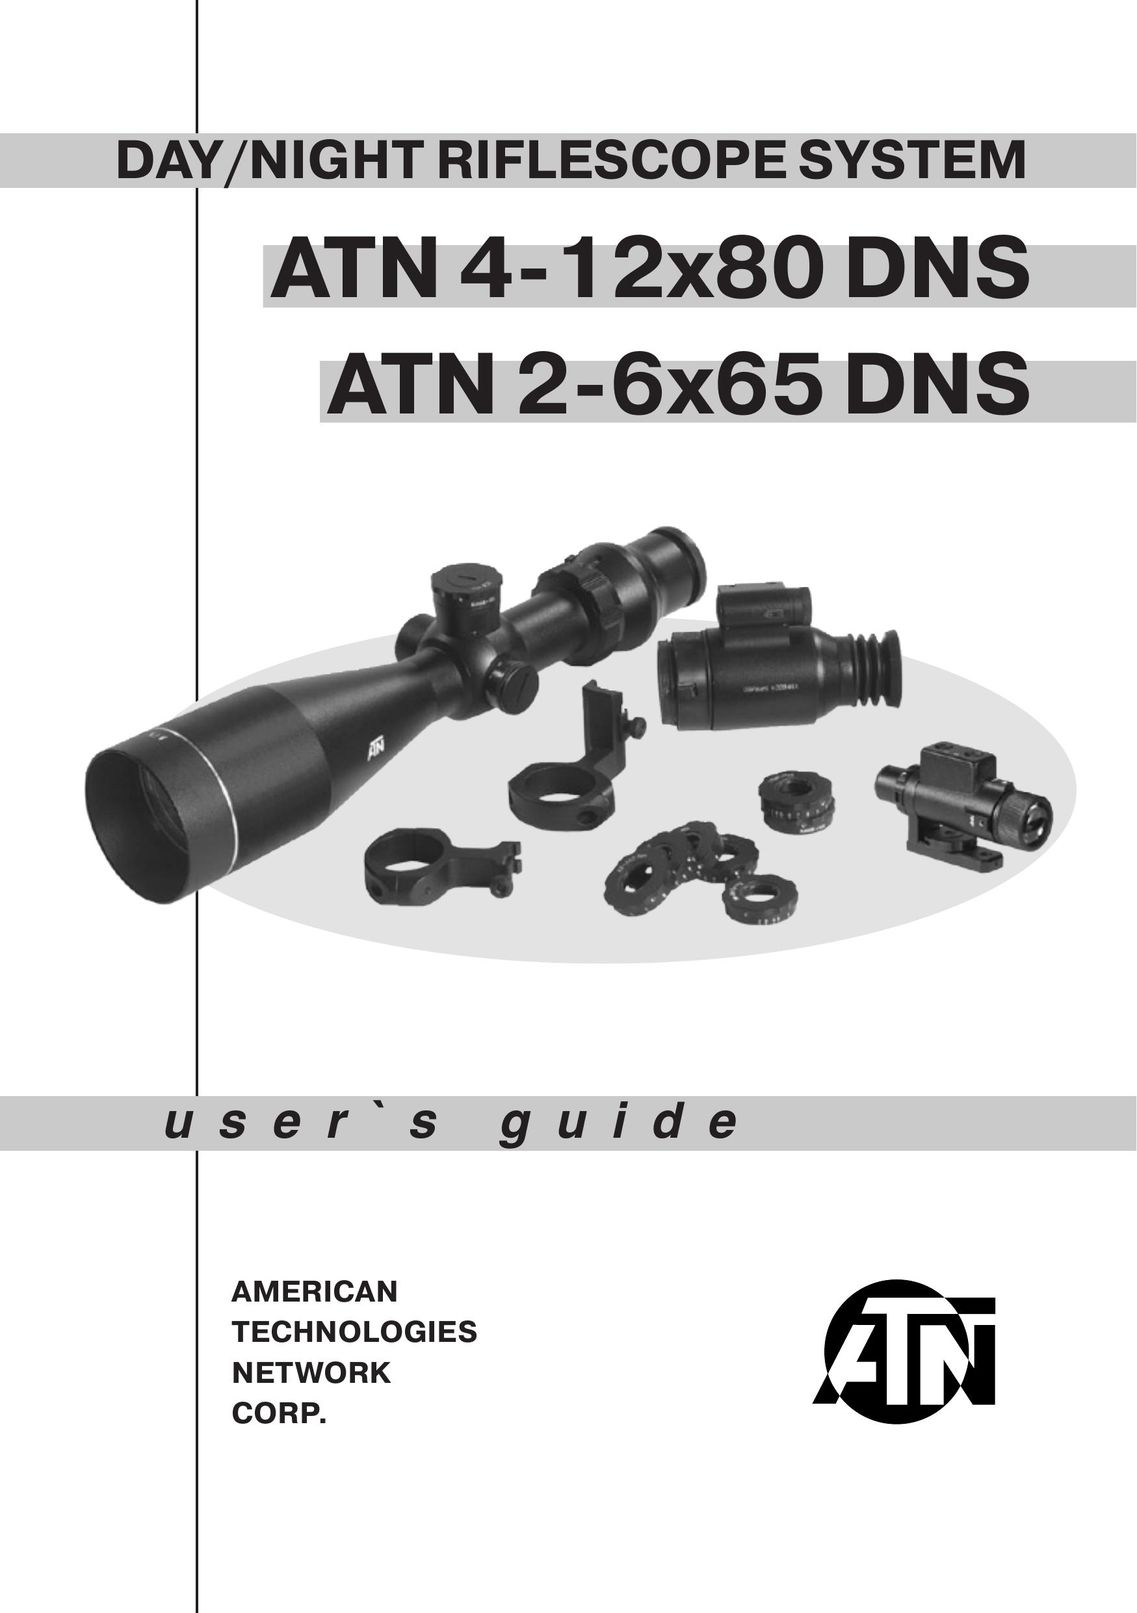 ATN ATN 2-6x65 DNS Hunting Equipment User Manual